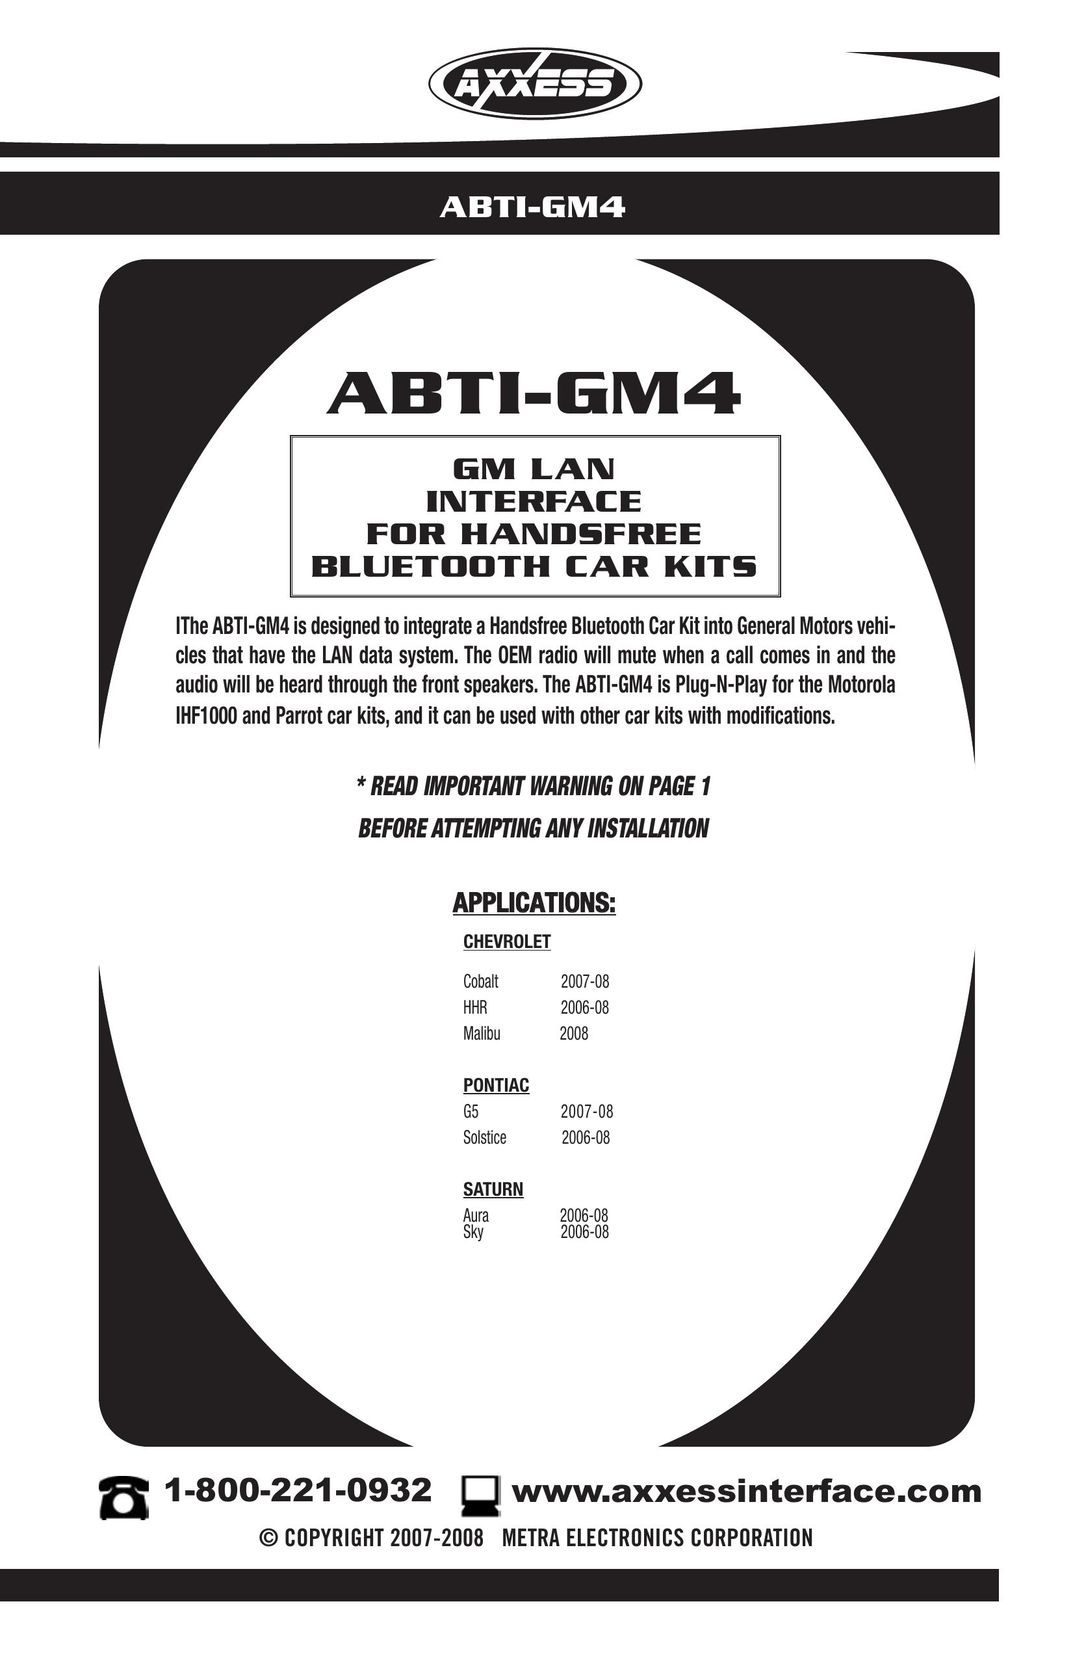 Axxess Interface ABTI-GM4 Cell Phone User Manual